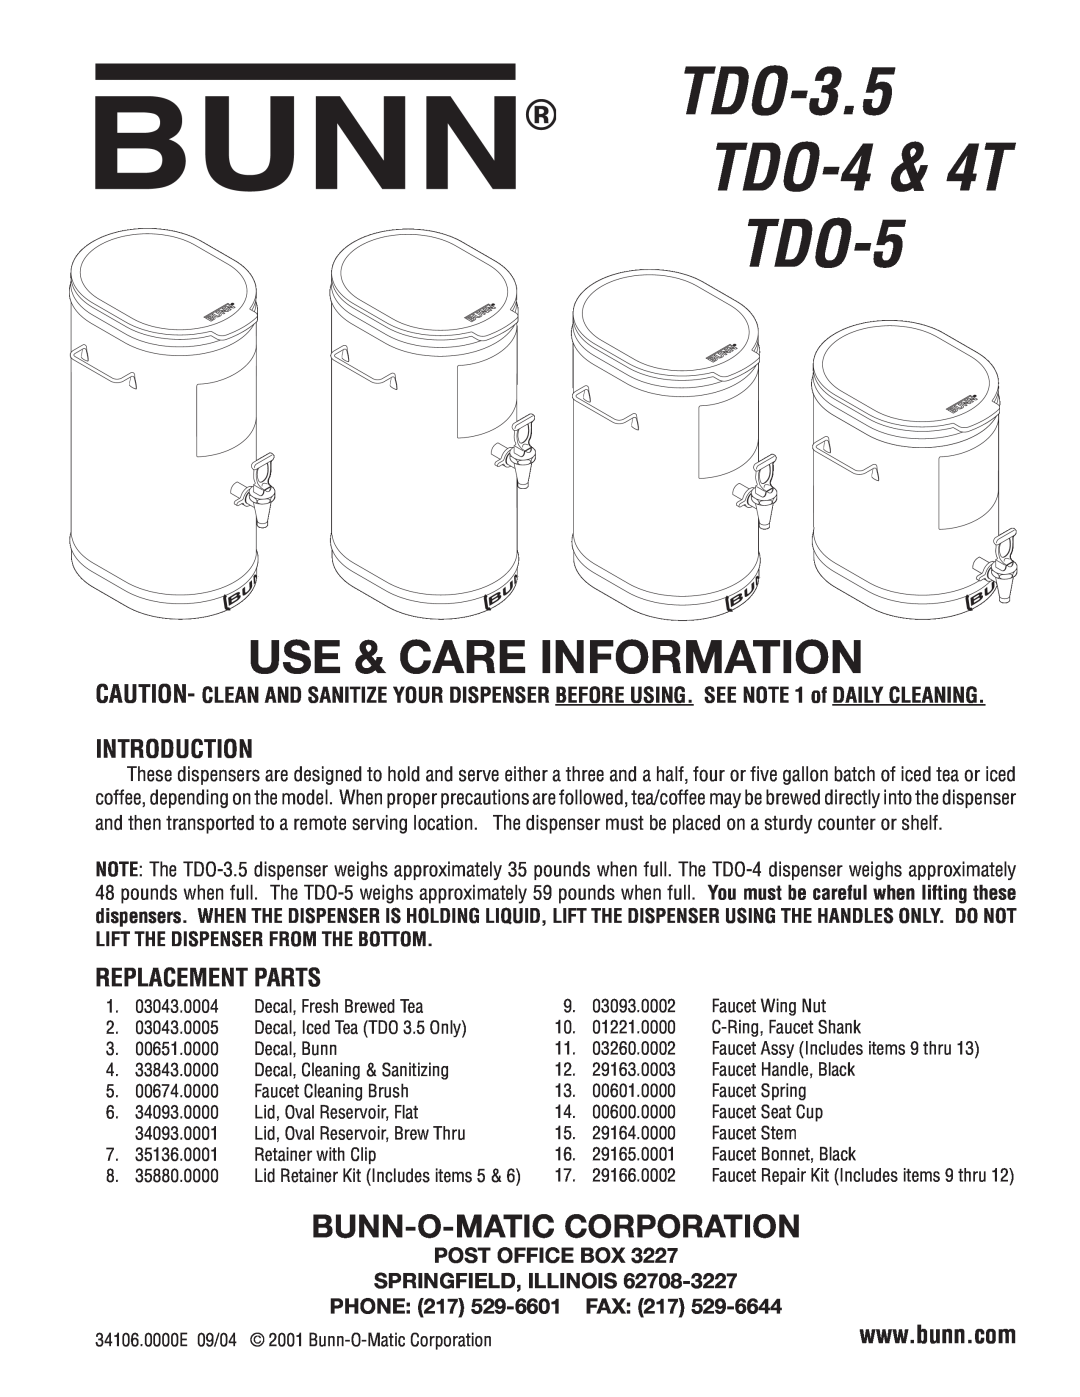 Bunn manual Introduction, Replacement Parts, TDO-3.5 TDO-4& 4T TDO-5, Use & Care Information, Bunn-O-Maticcorporation 